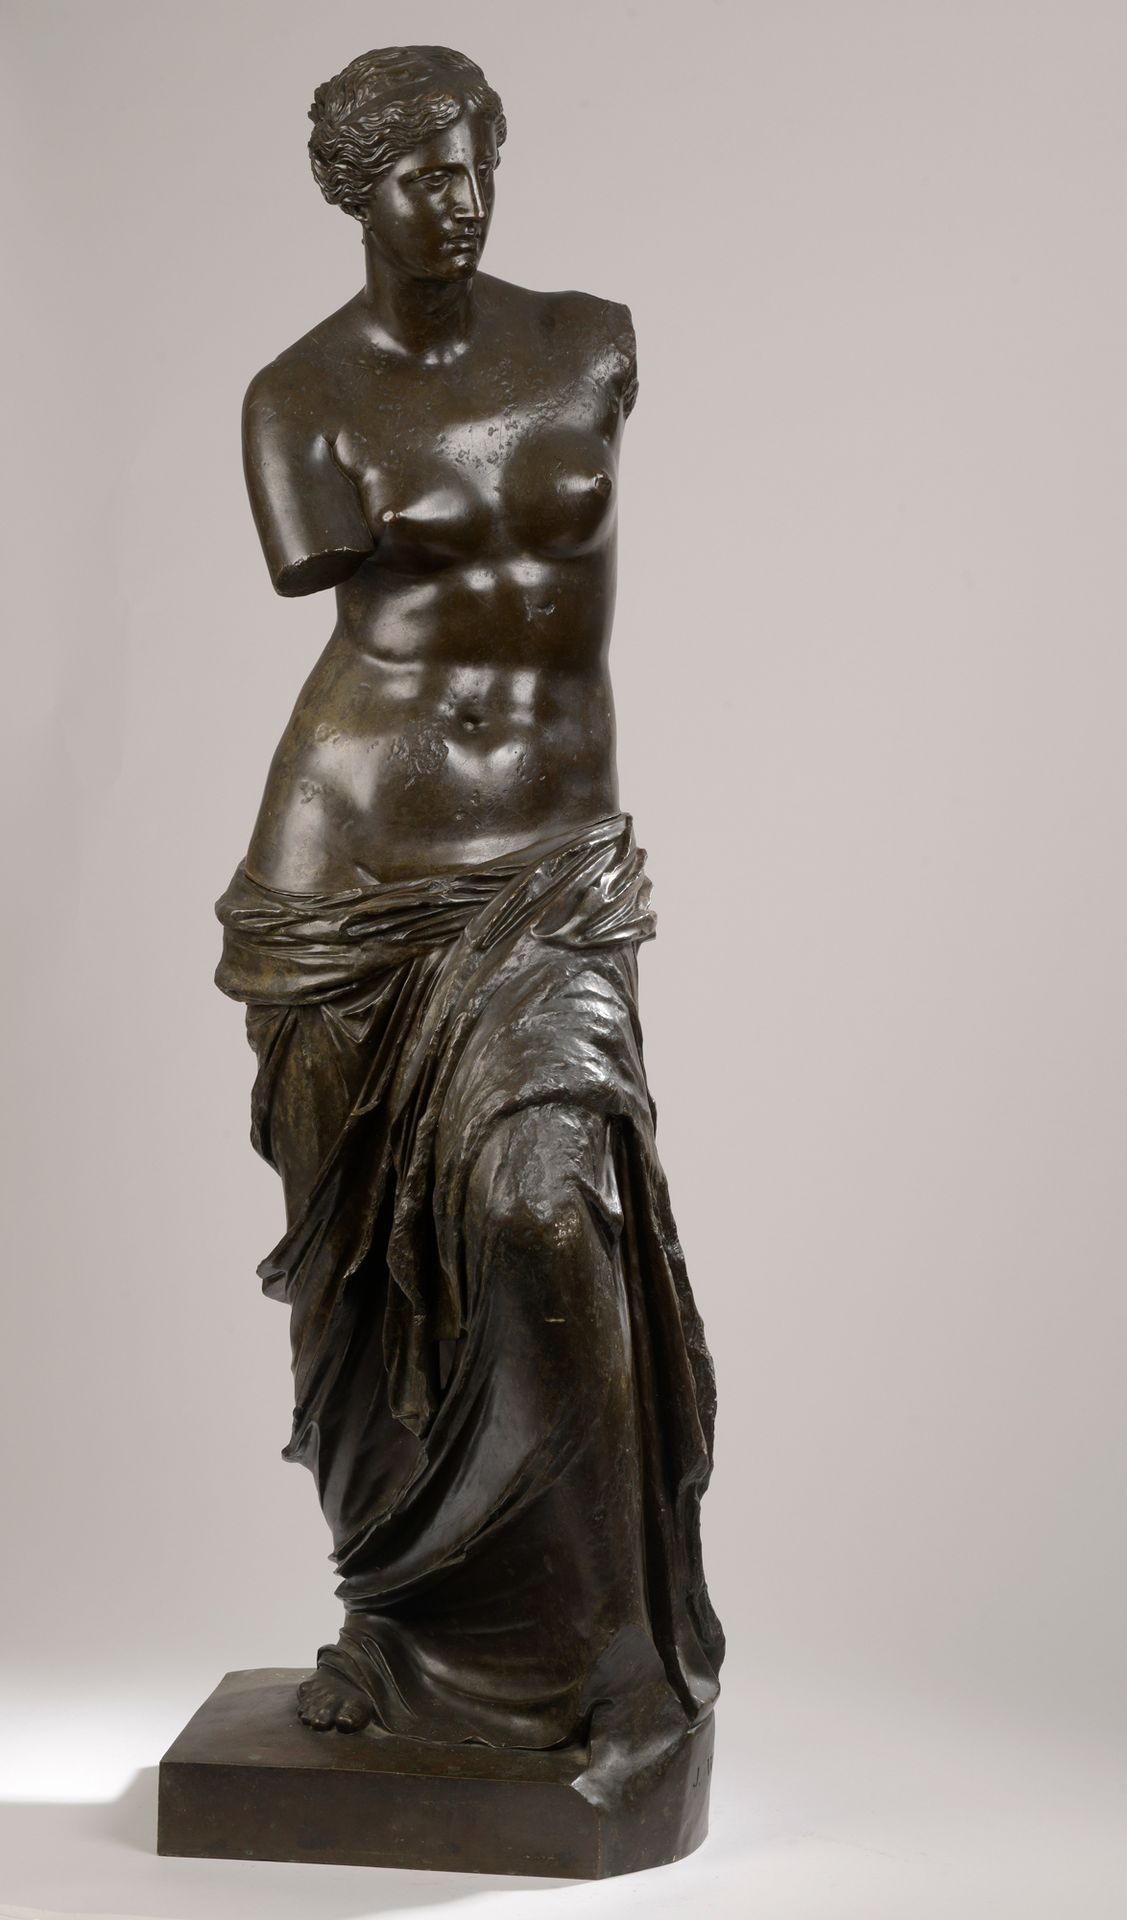 Null 约翰-瓦尔兹(1844-1922)

米洛的维纳斯在古董之后

青铜，带有浅棕色的铜锈。

签名：J WALZ。

印有创始人路易斯-马蒂的标记。

&hellip;